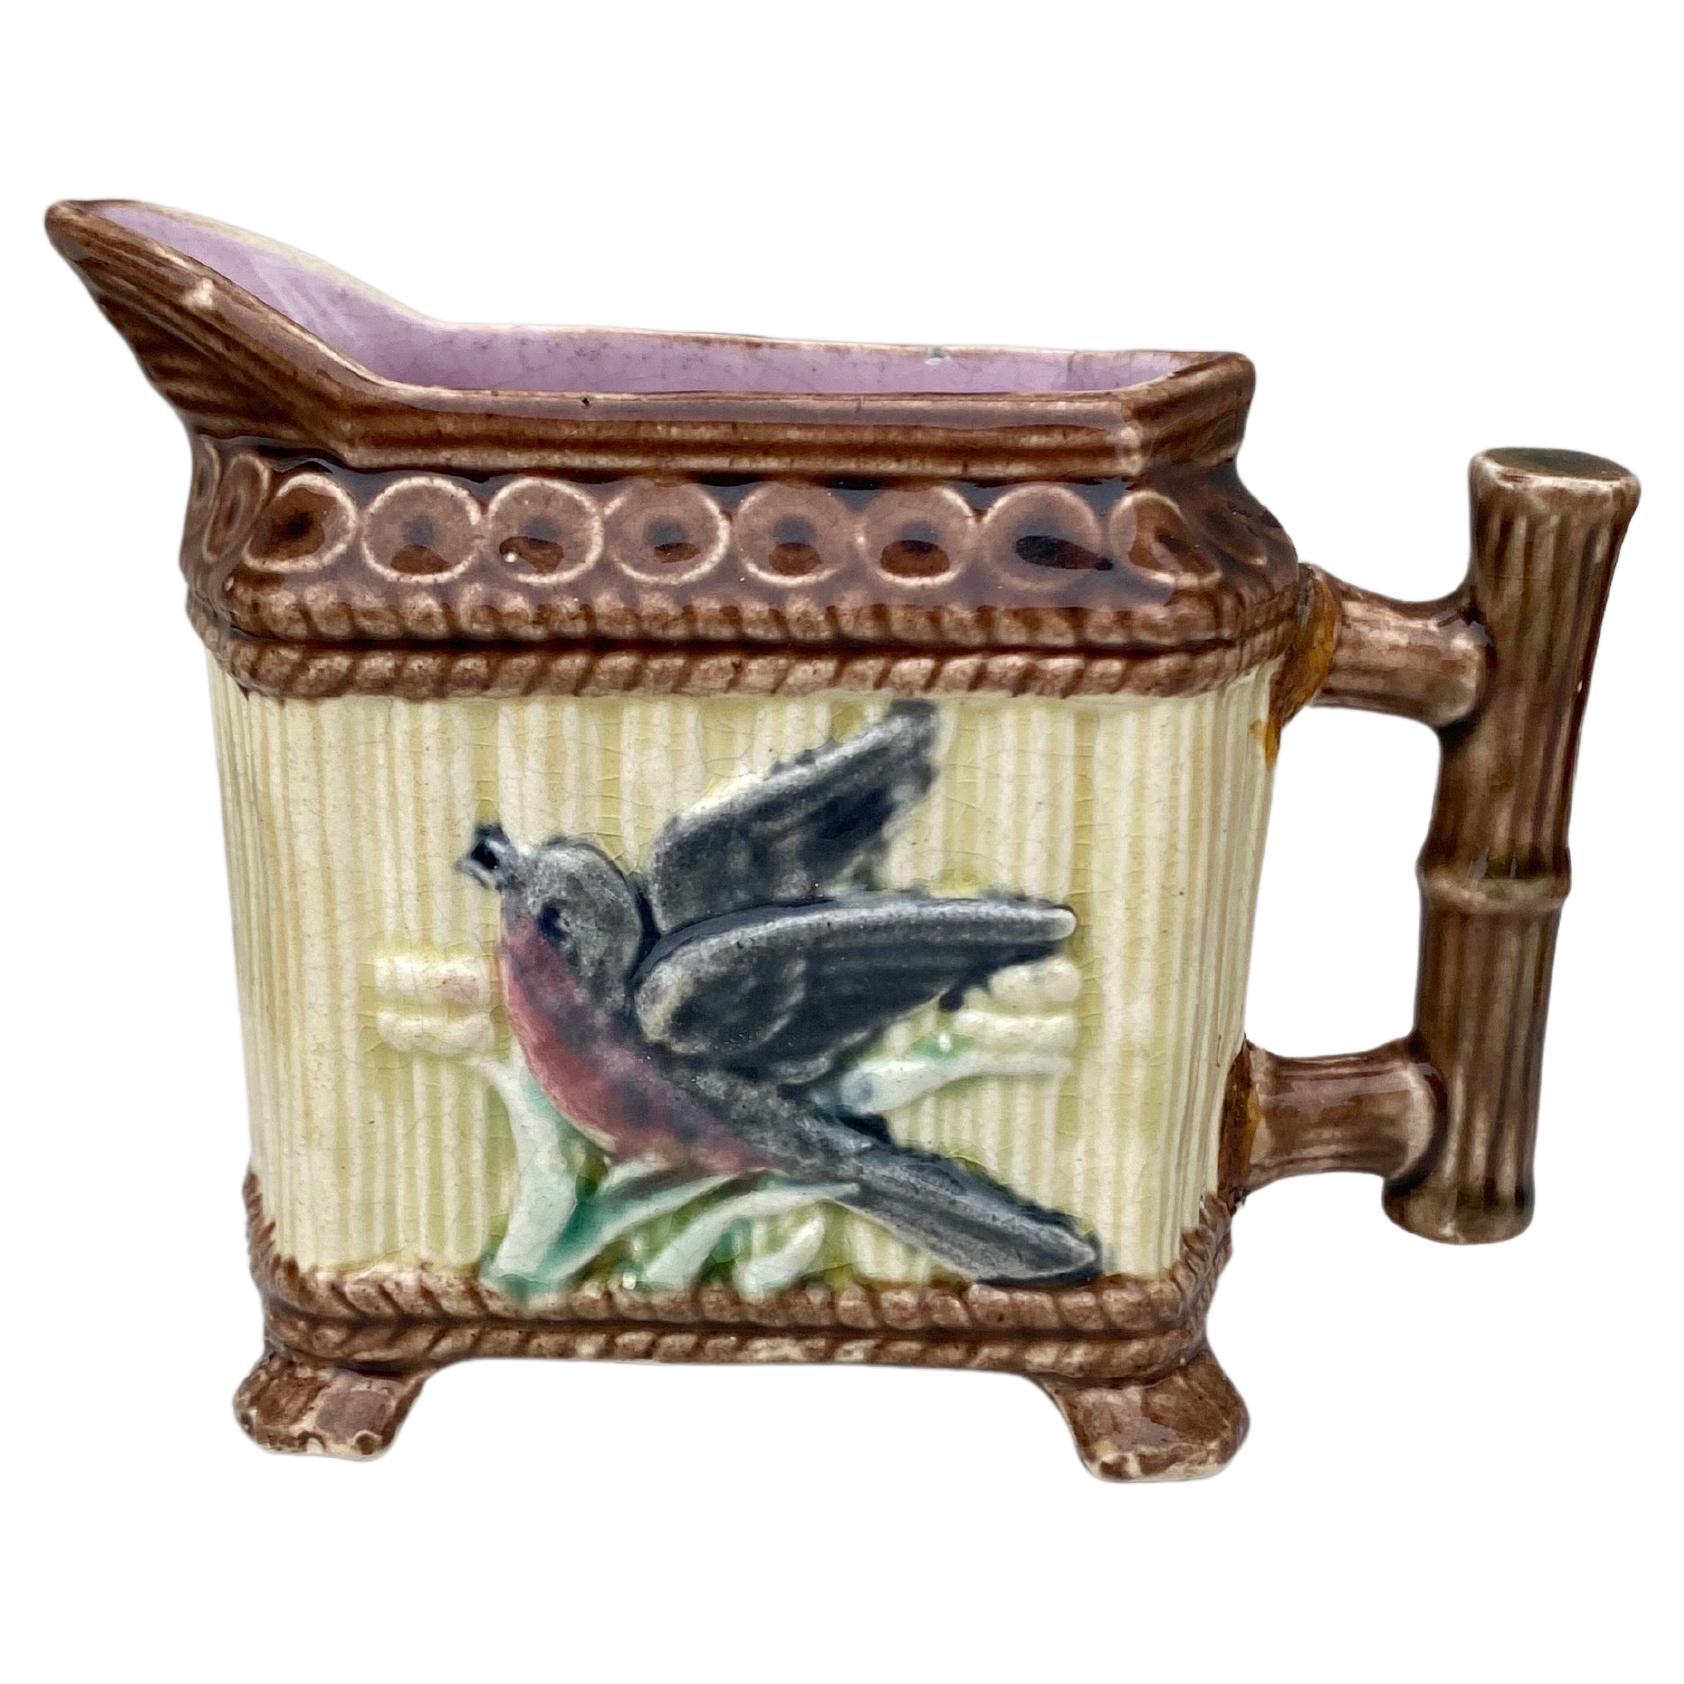 English Majolica tea set bamboo and bird circa 1890.
Teapot H / 6.8